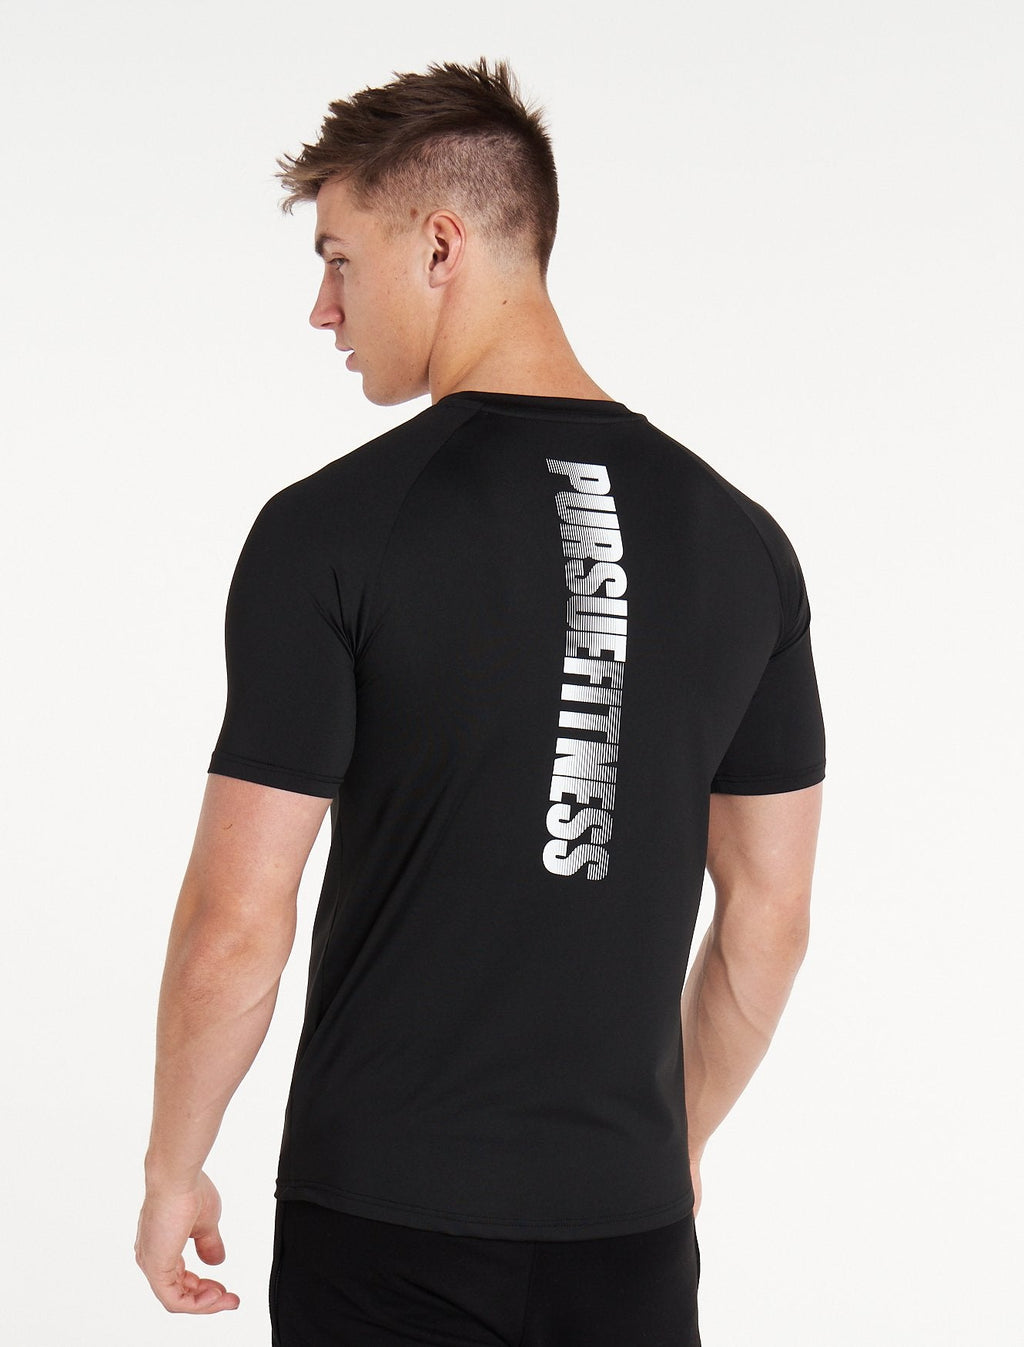 products/mens-breatheasyr-surge-t-shirt-black.jpg